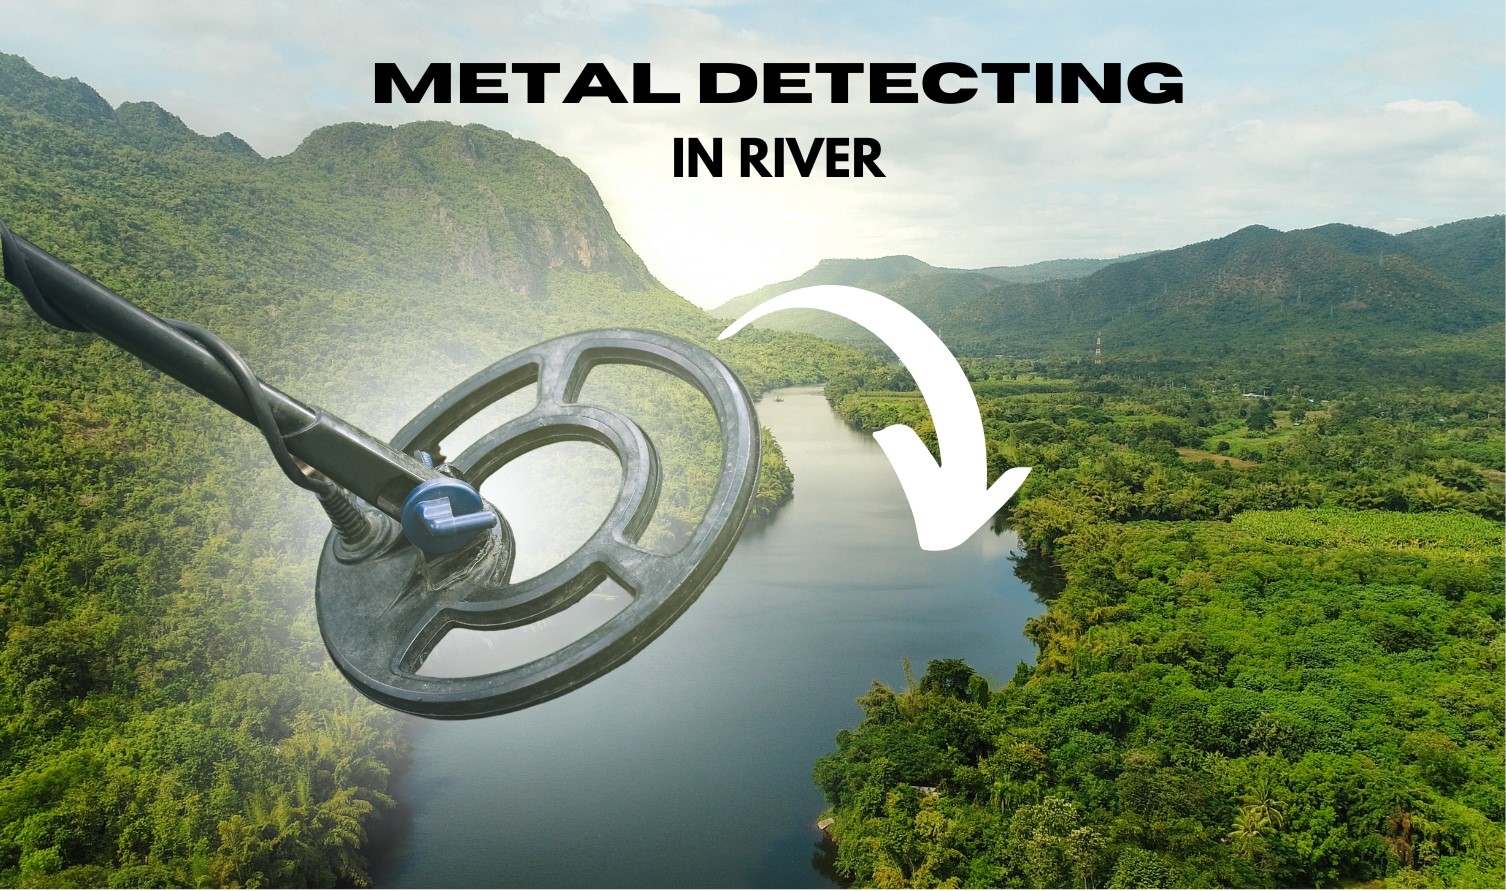 Metal Detecting in a river.